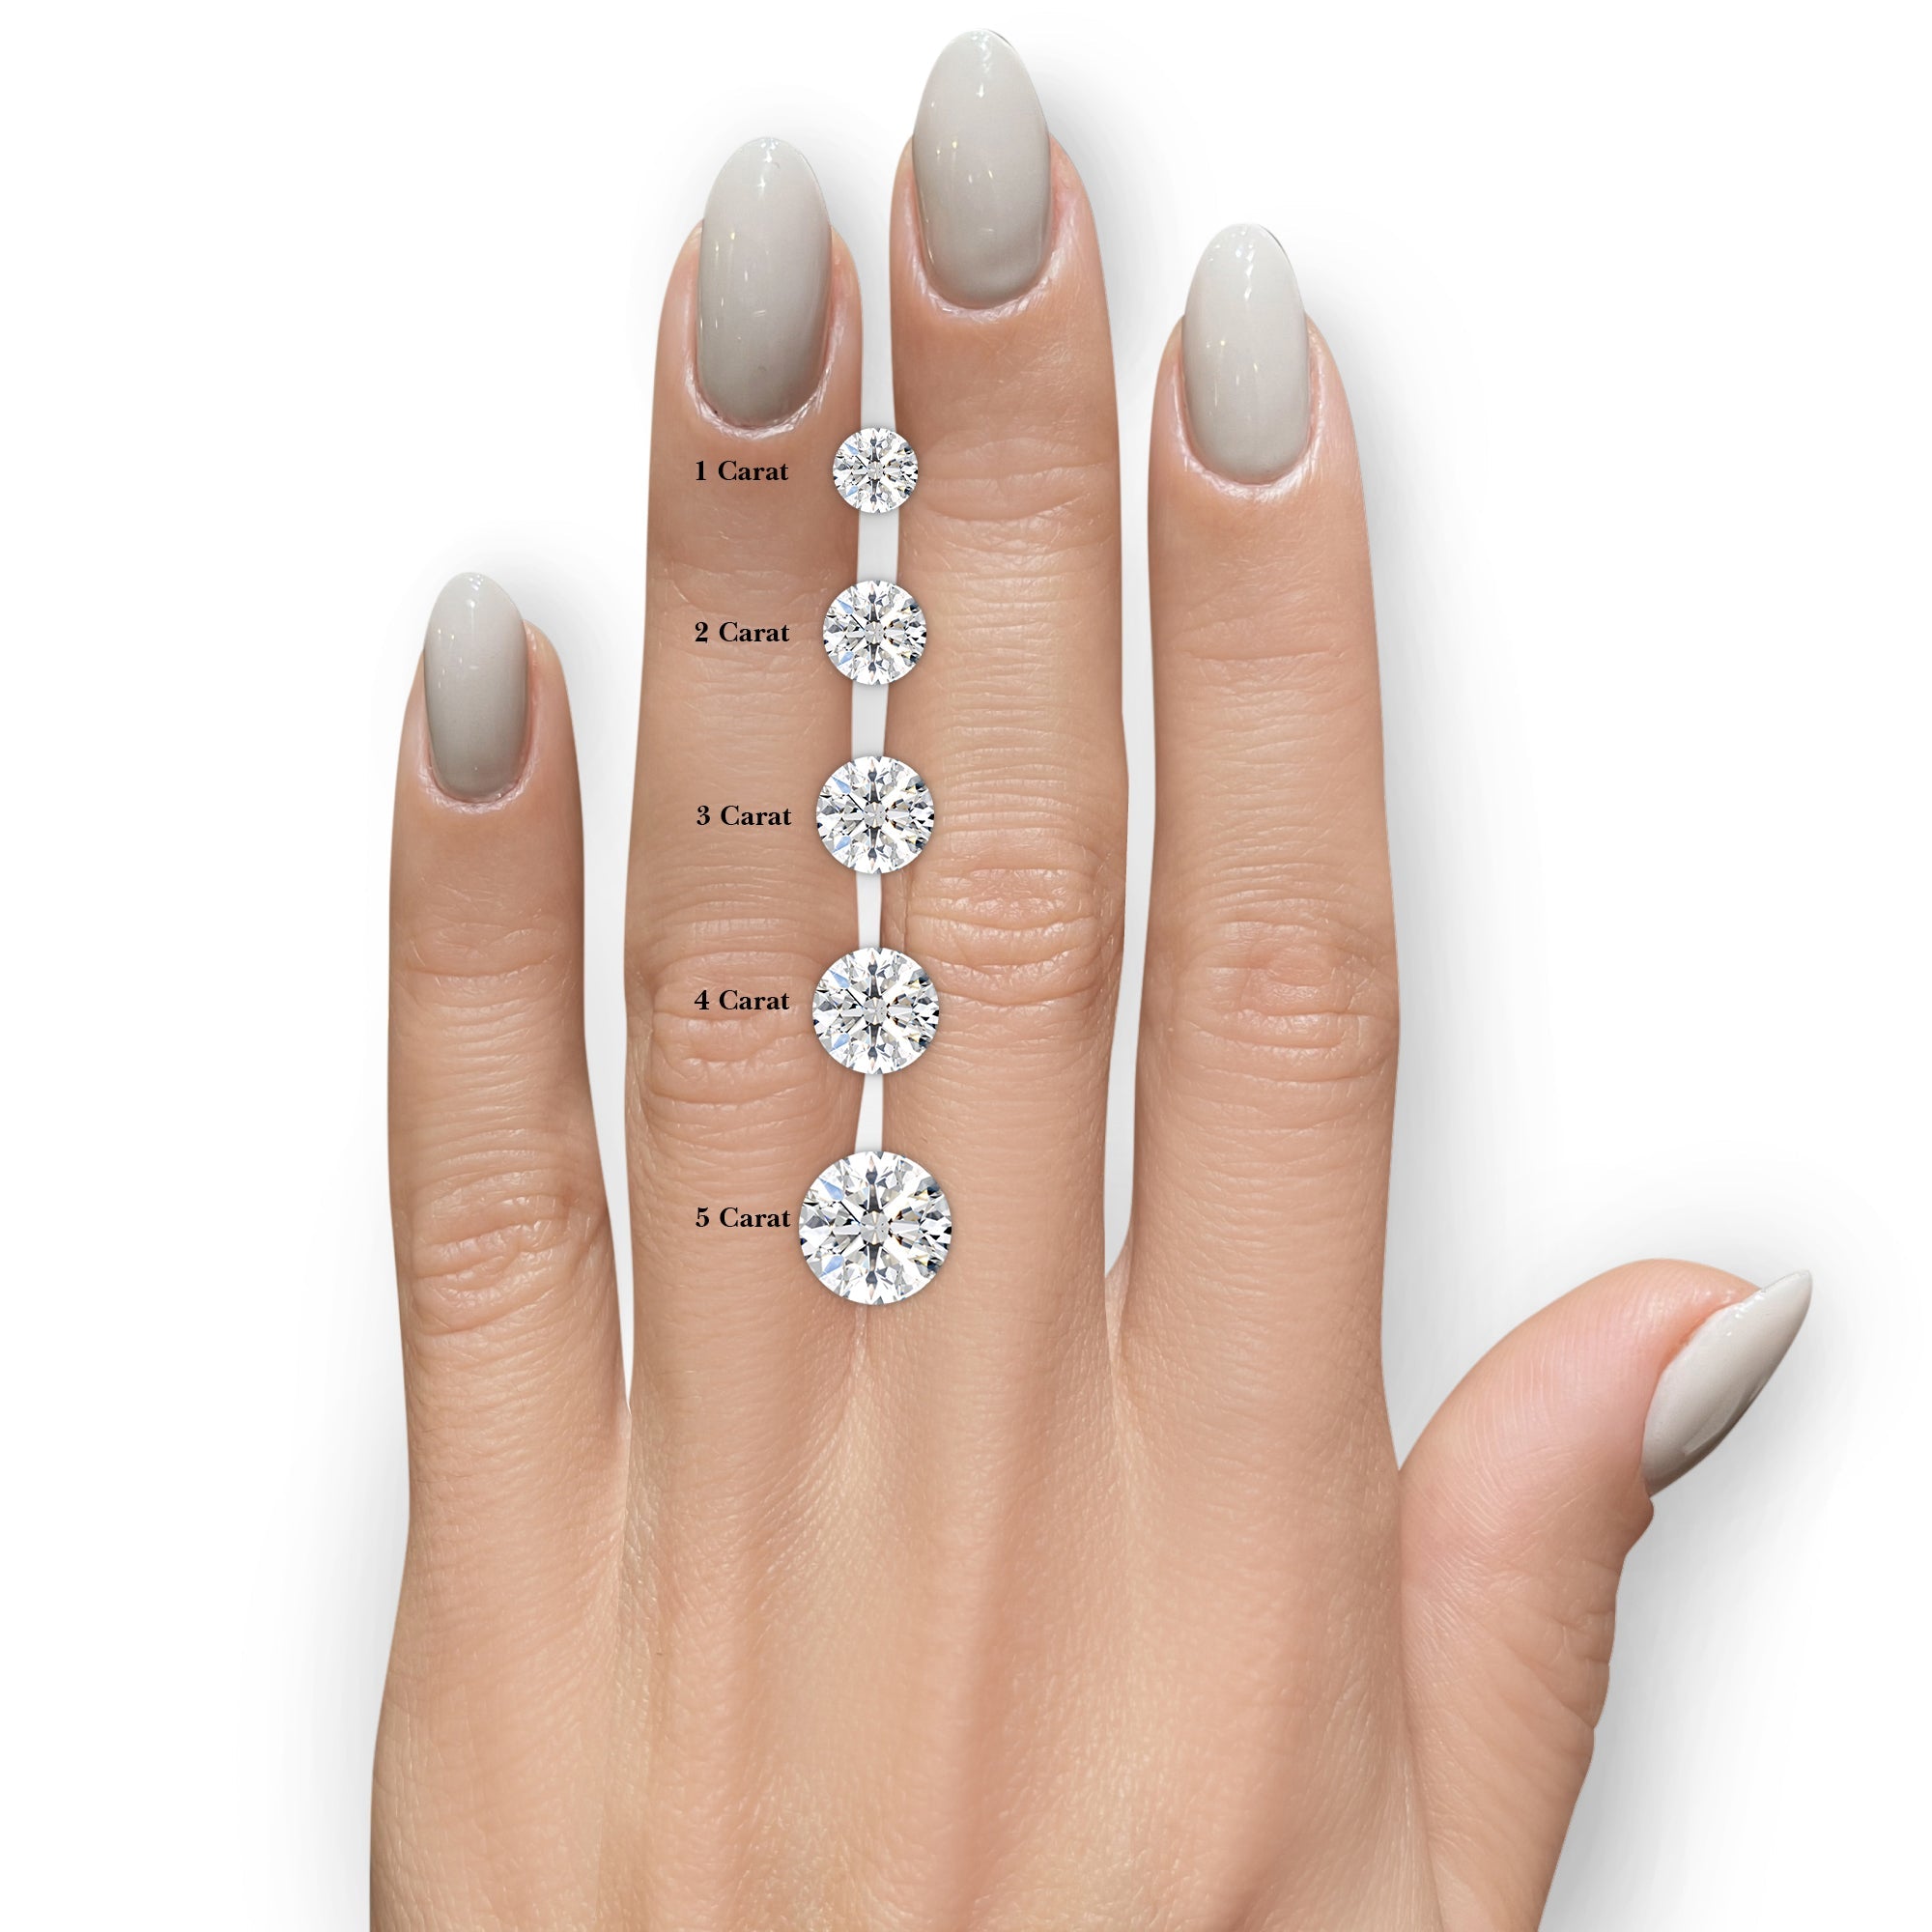 Claudia Diamond Engagement Ring -14K White Gold (RTS)